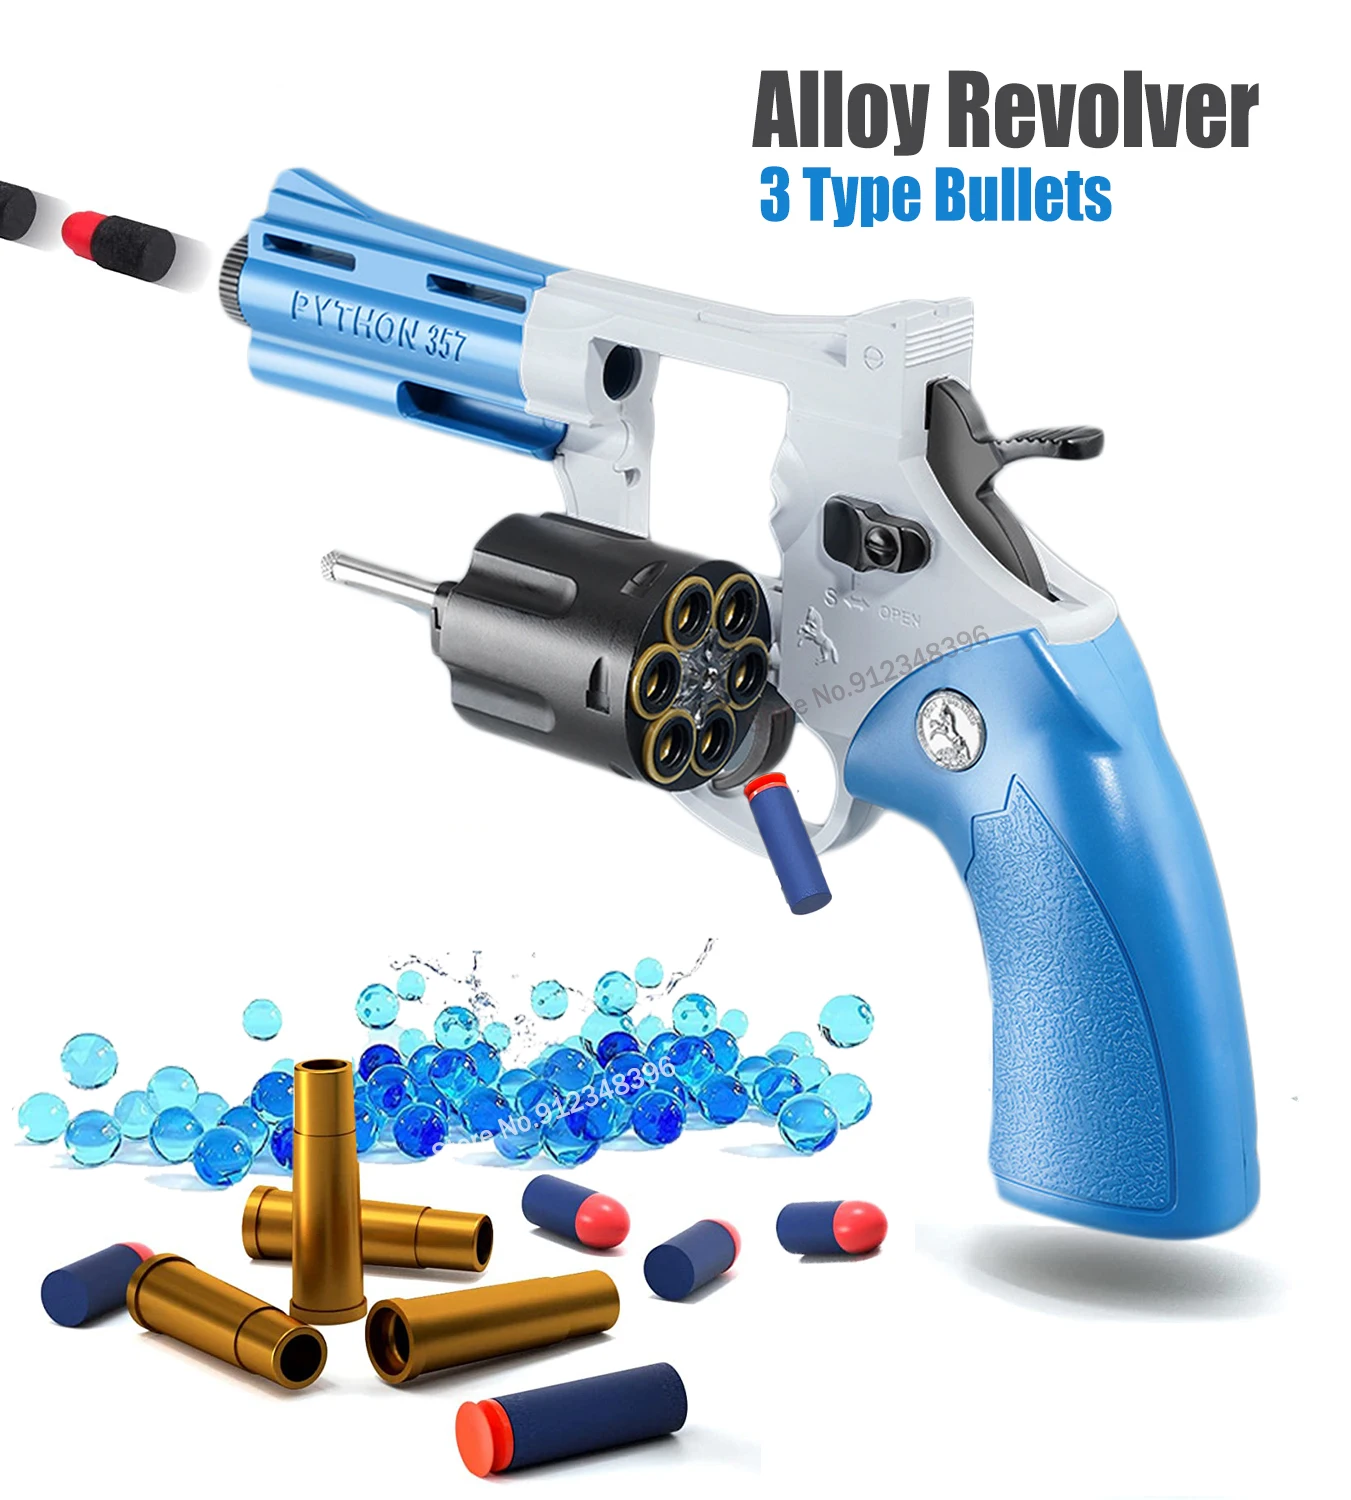 

ZP5 357 Alloy Revolver Pistol Launcher Gel Blaster Soft Dart Bullet Toy Gun Outdoor Weapon Airsoft Pneumatic Pistola for Kids